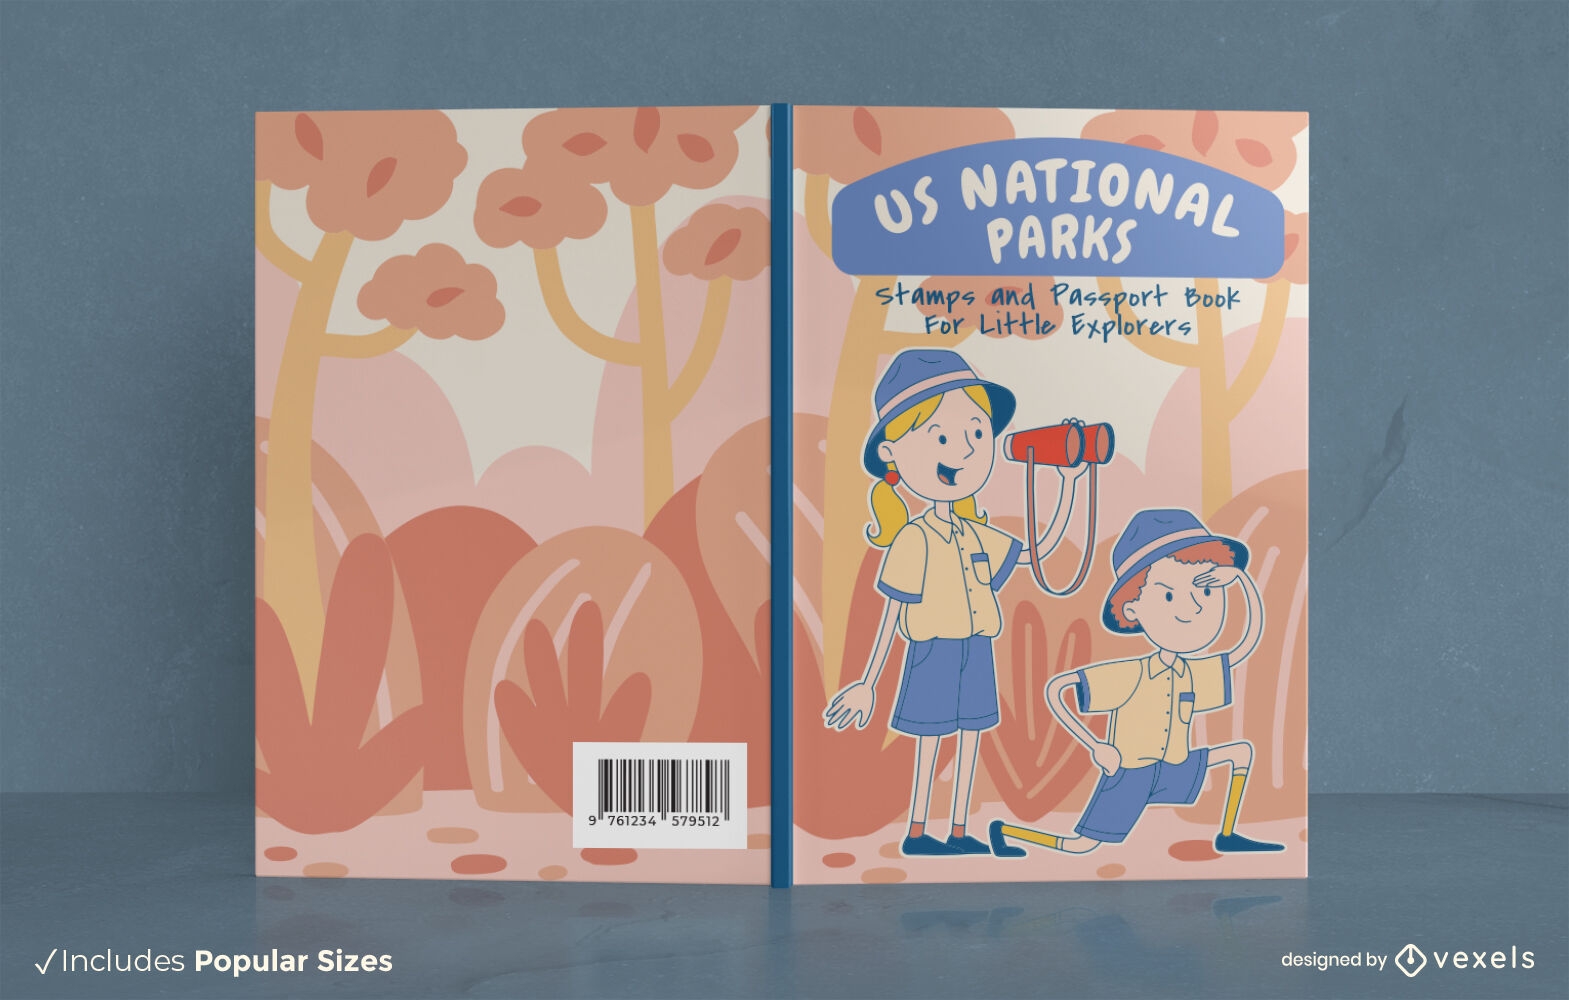 US National Parks explorers book cover design